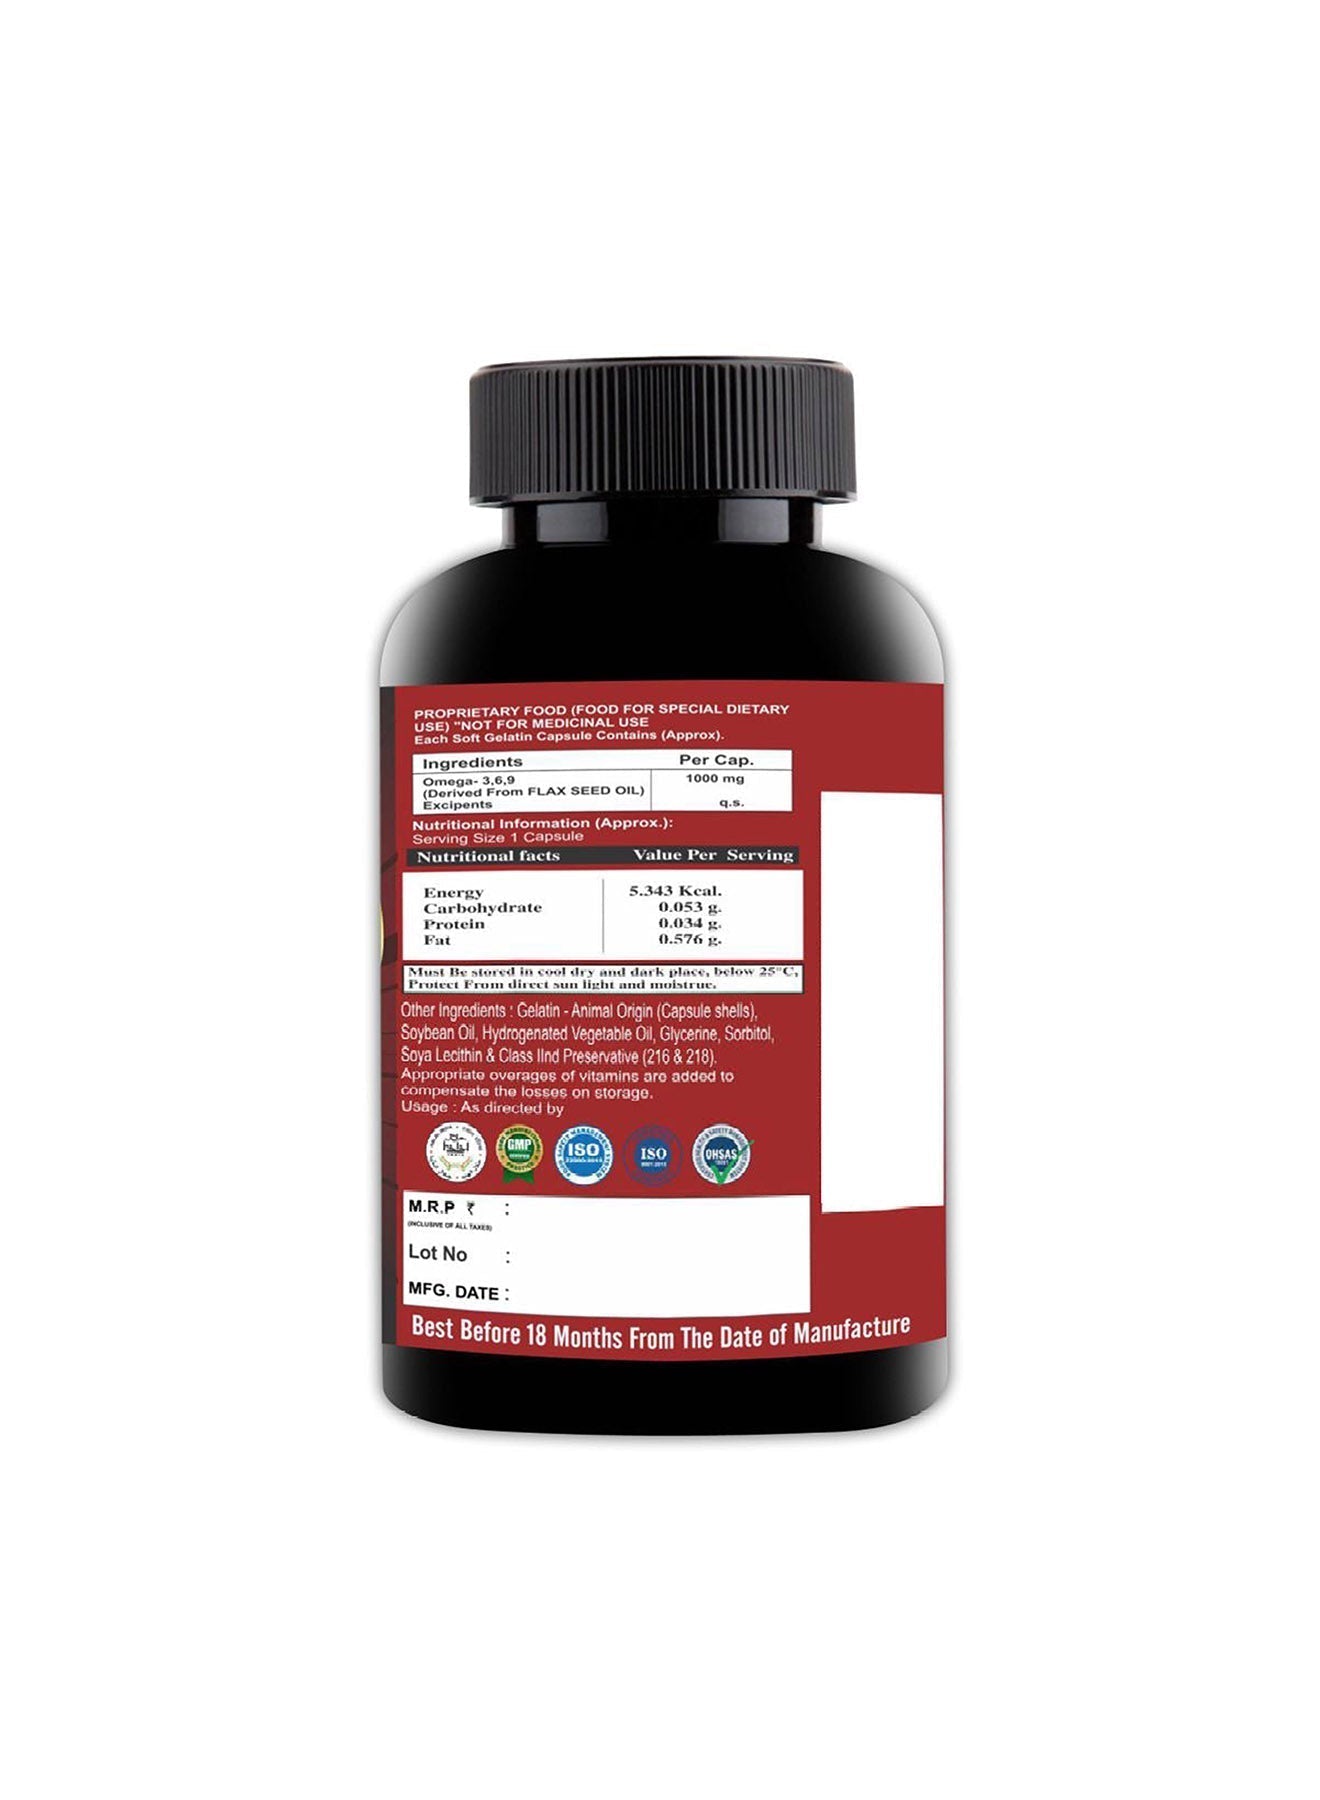 Cipzer Flaxseed oil SoftGel 60 Capsule  1000 mg Value Pack of 3 